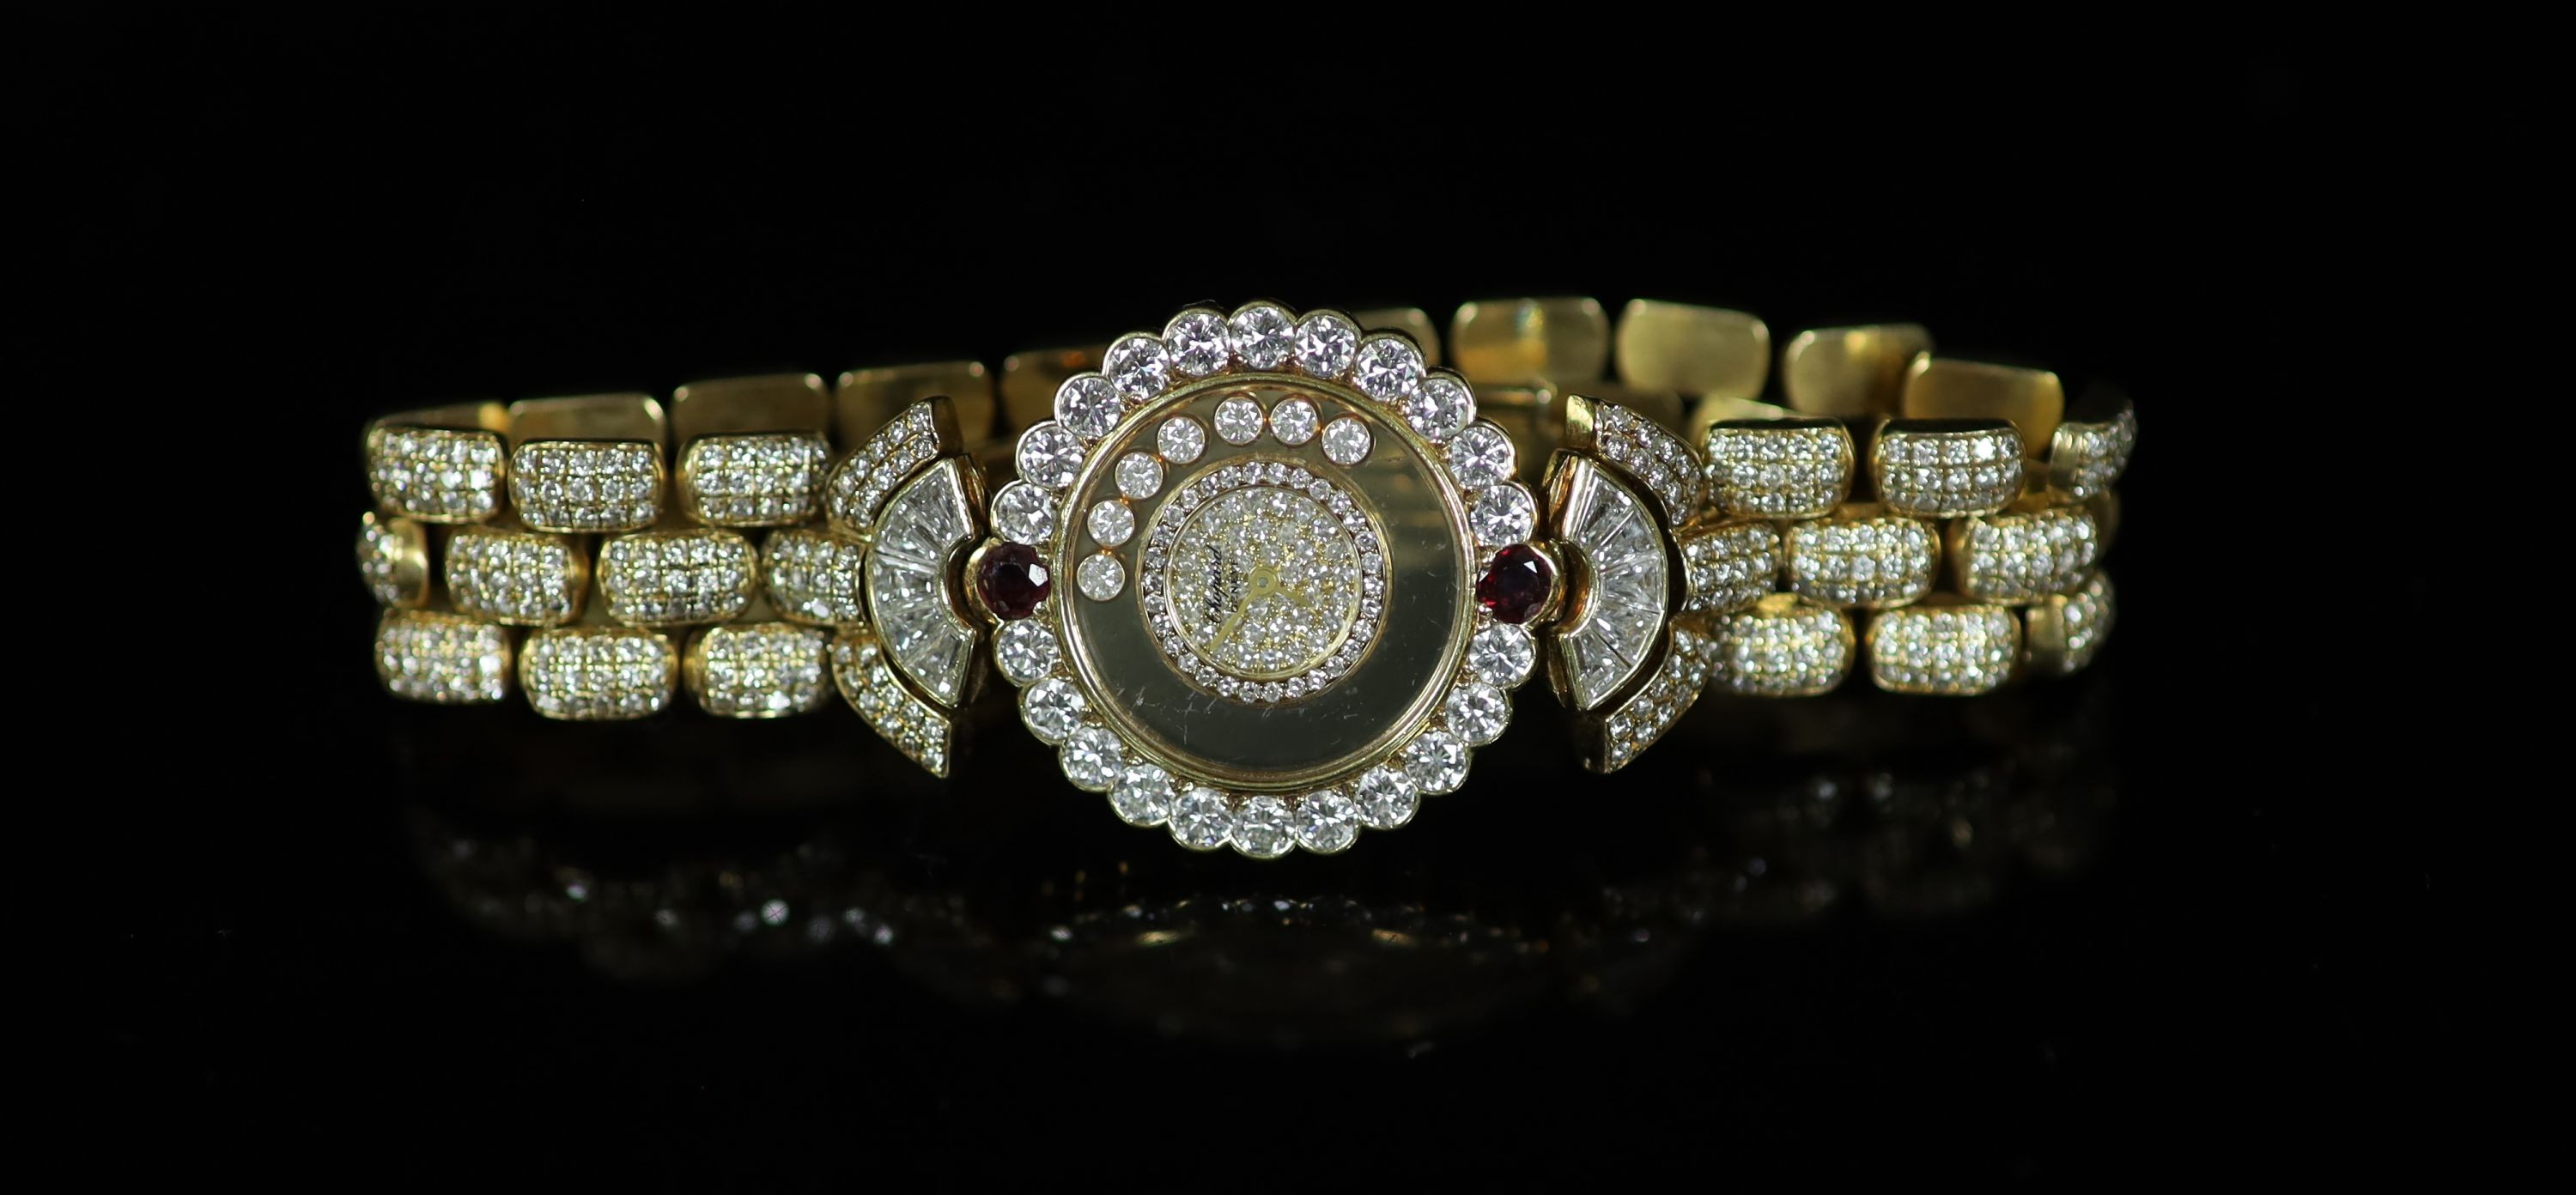 A lady's Chopard 'Happy Diamonds' 18ct gold, ruby and diamond encrusted dress wrist watch